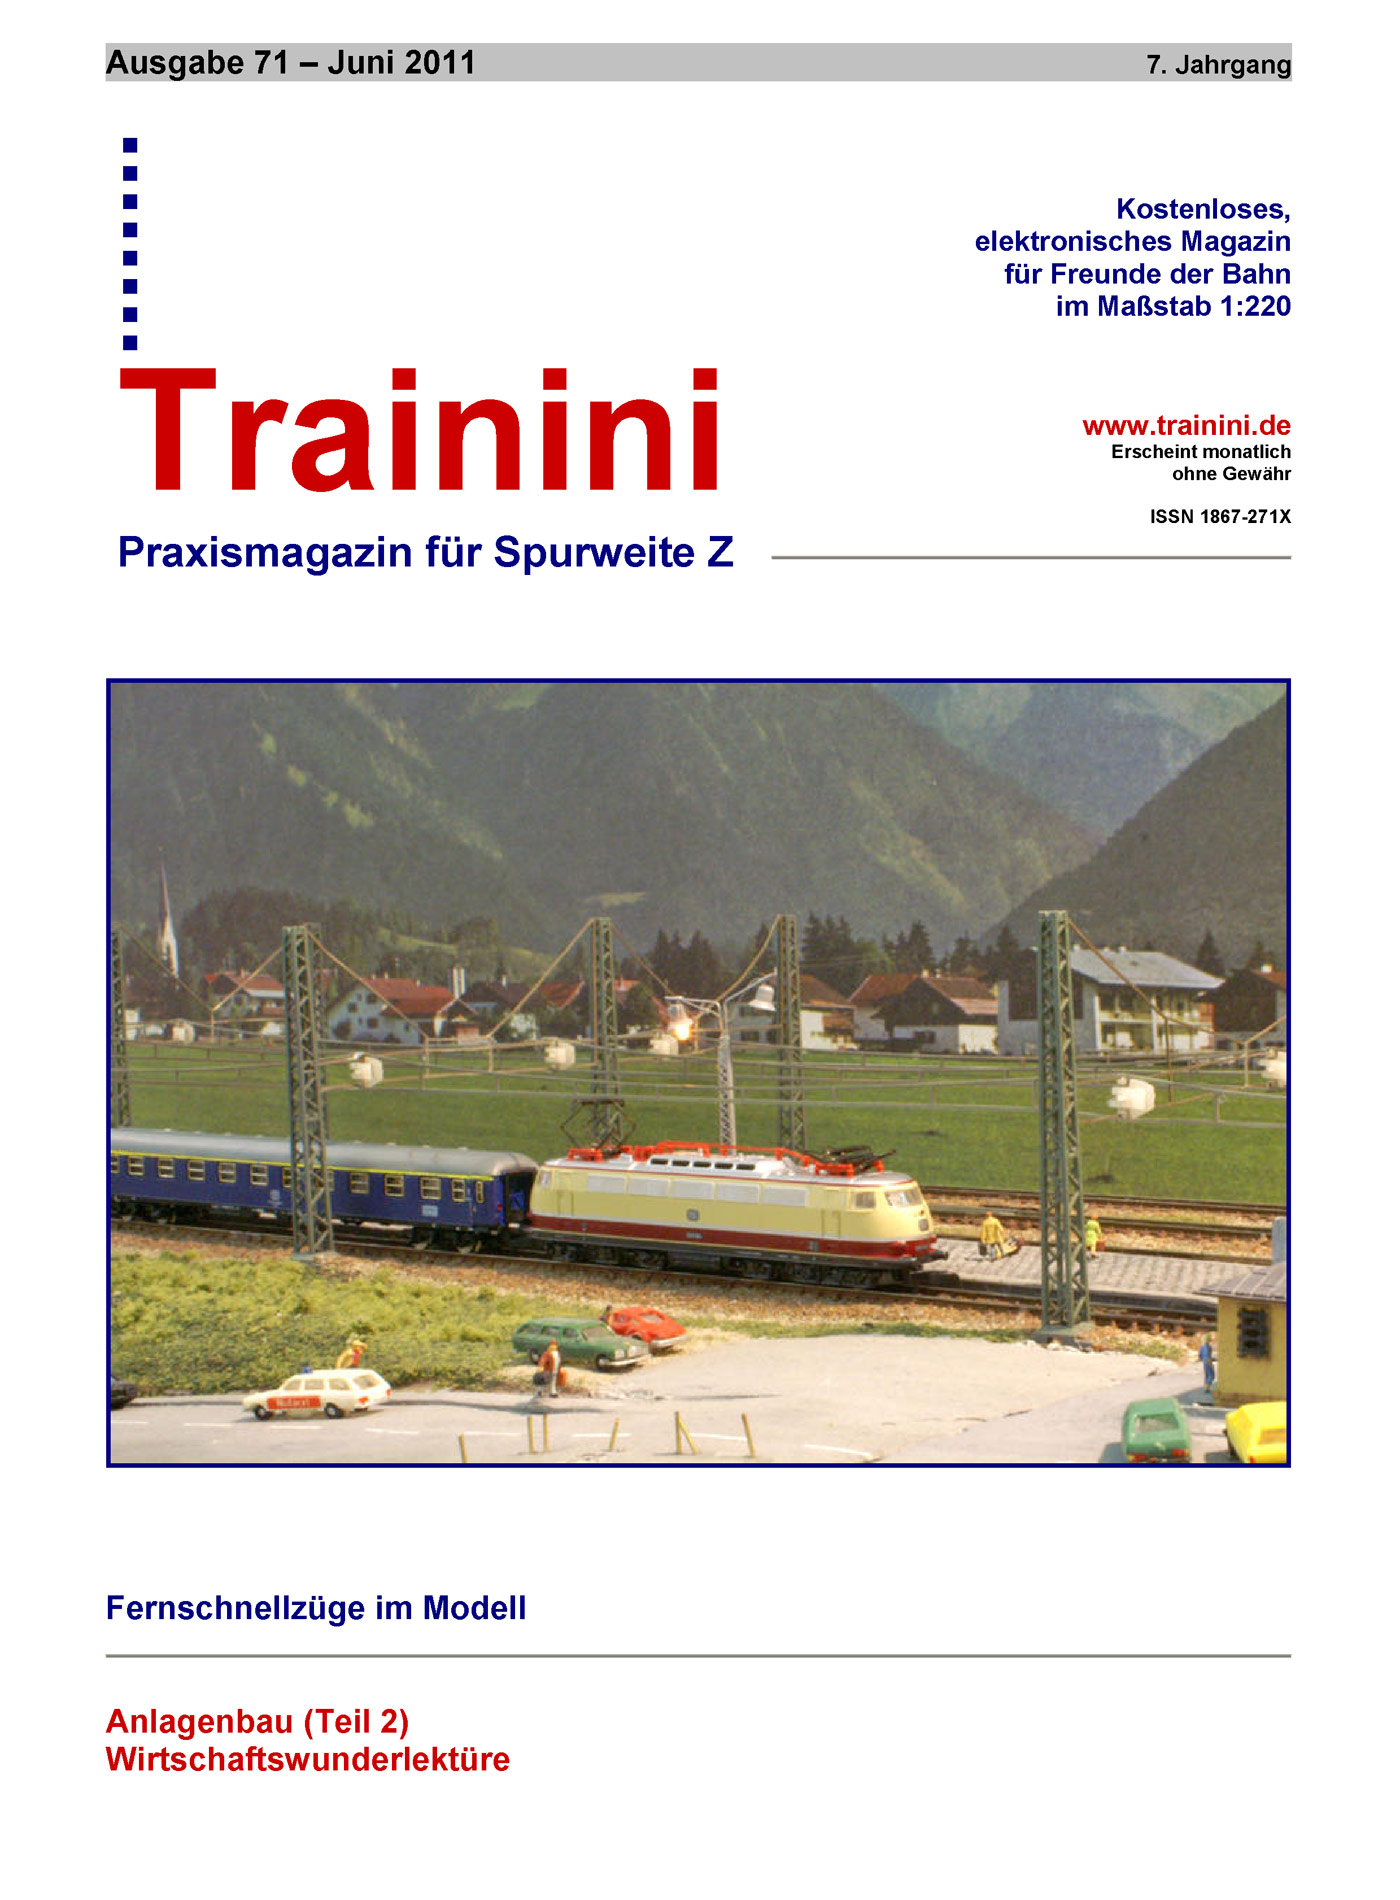 Trainini Ausgabe Juni 2011